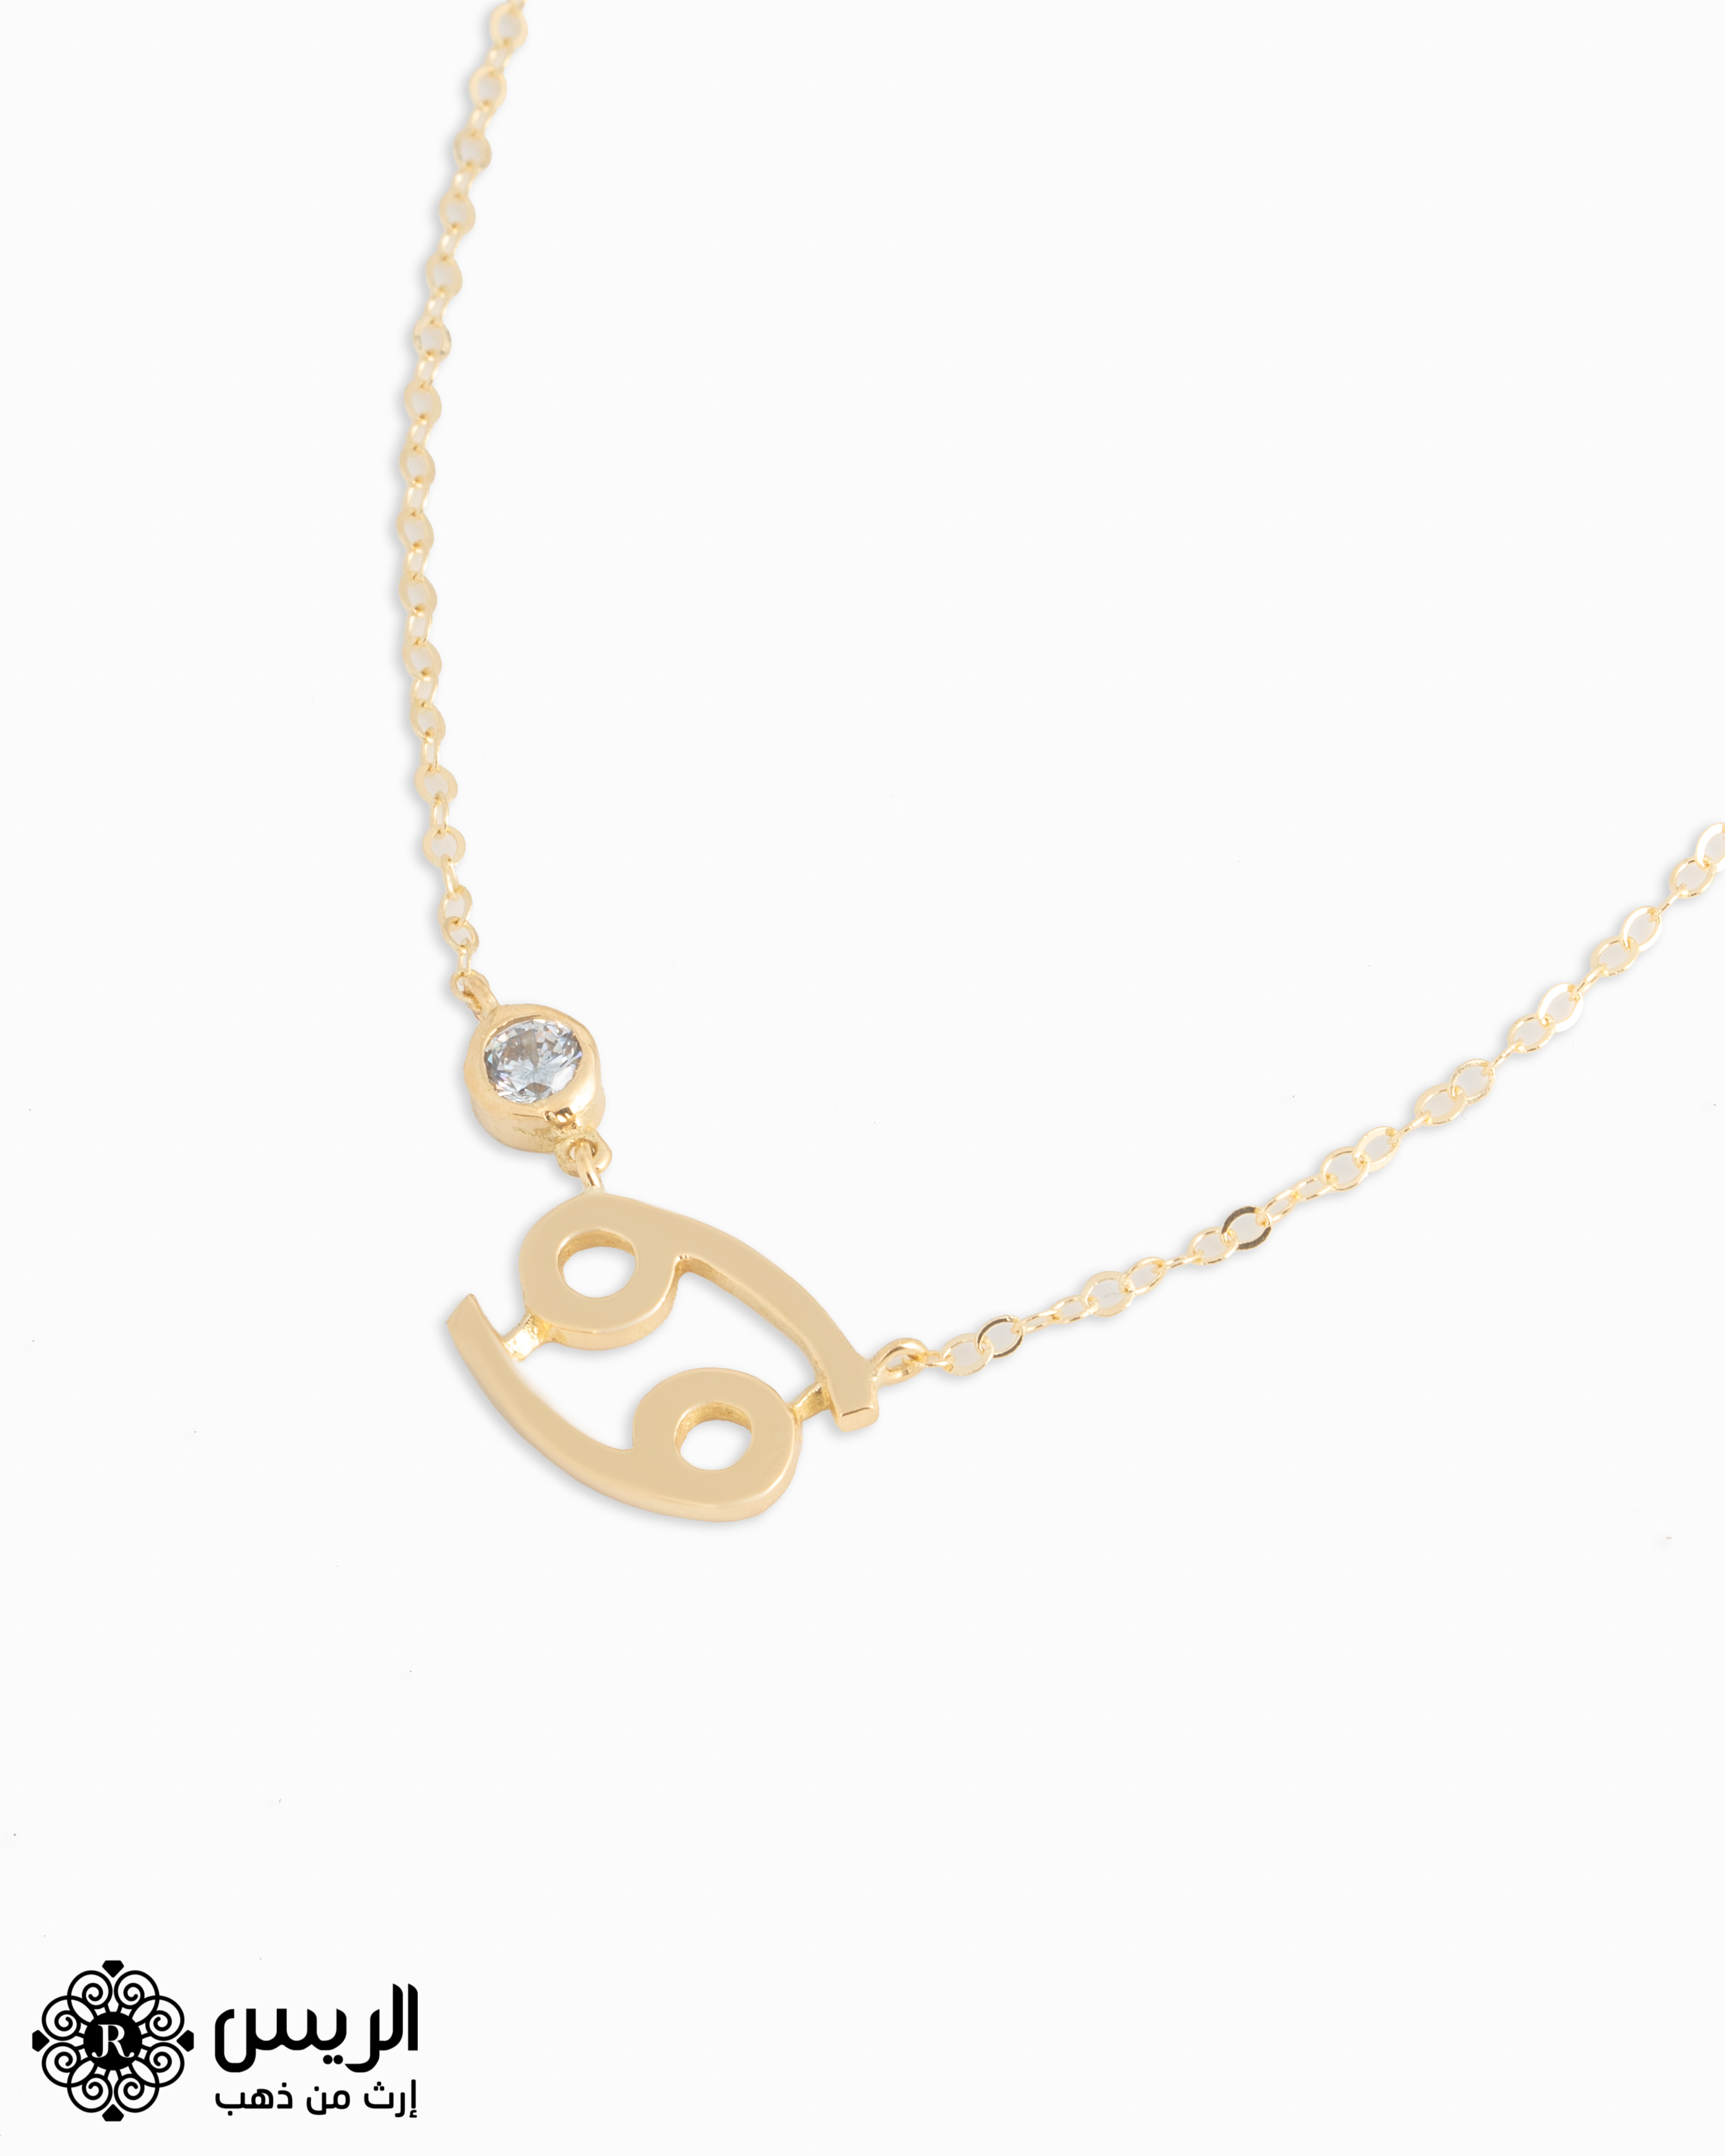 Raies jewelry Cancer Horoscope Pendant تعليقة برج السرطان الريس للمجوهرات